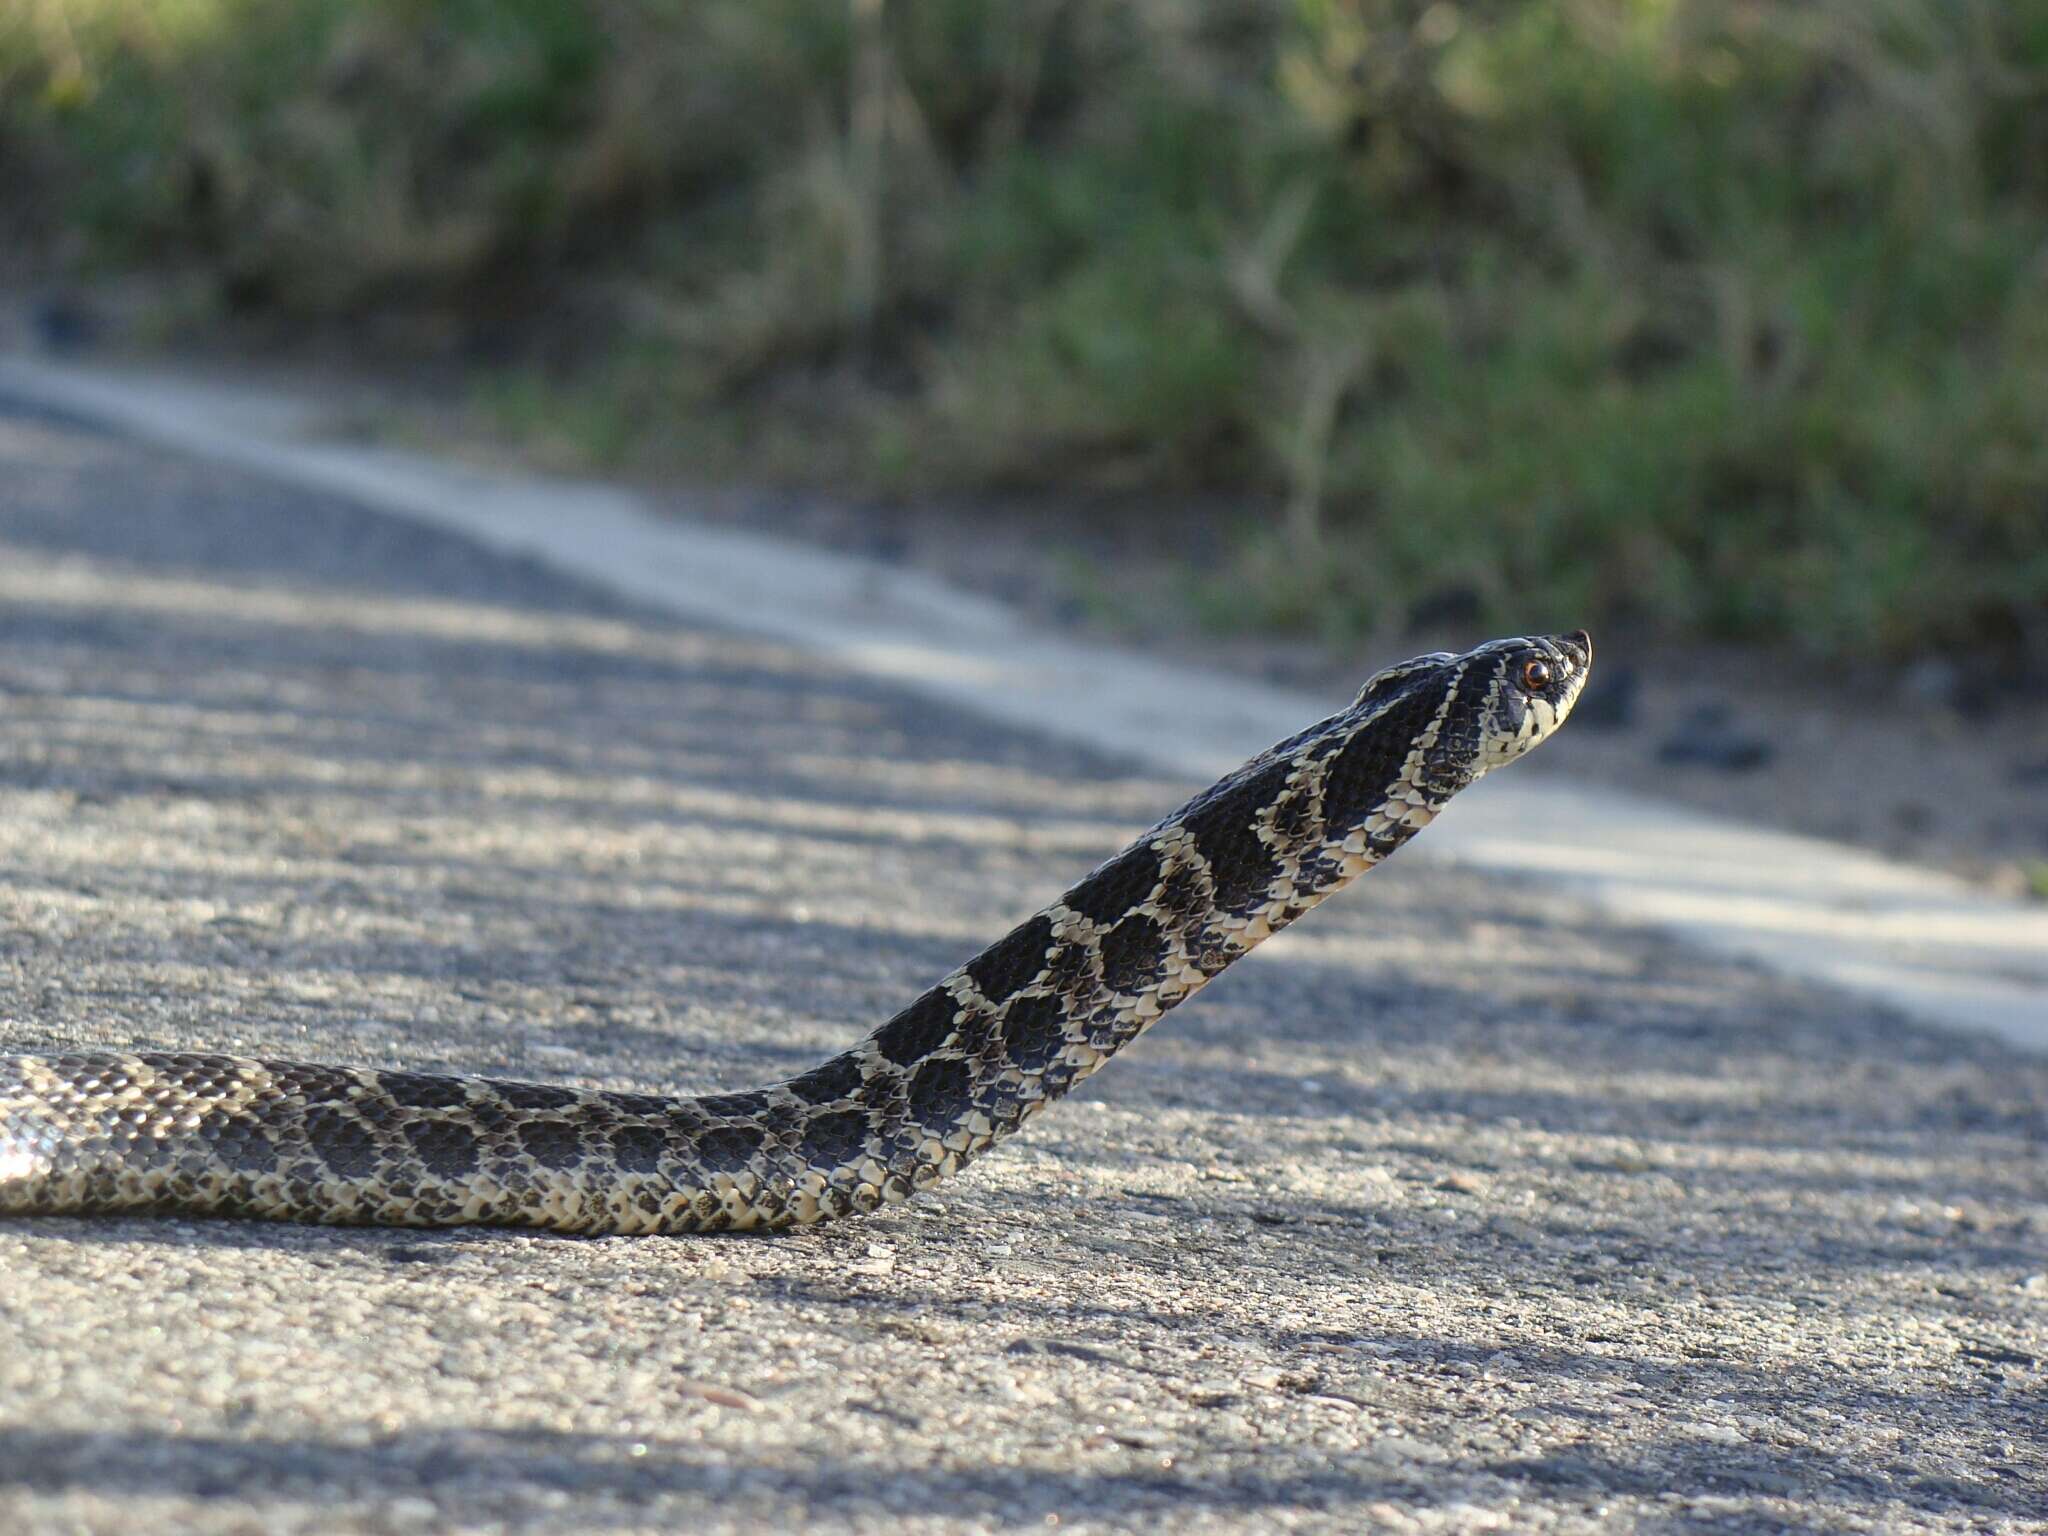 Image of South American Hognose Snake